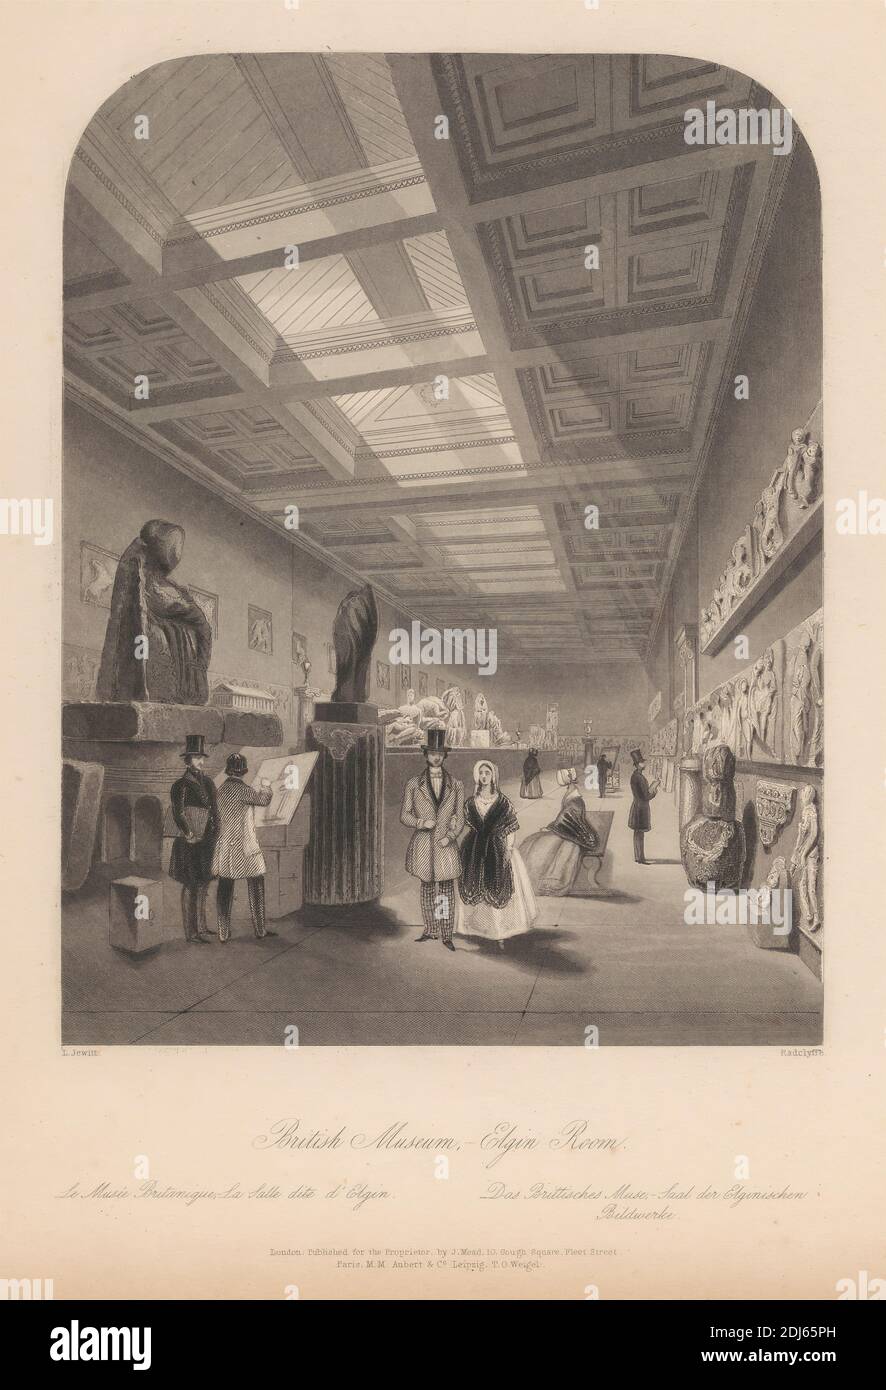 British Museum, Elgin Room, Print made by Edward Radclyffe, 1809–1863, British, after Llewellynn Jewitt, British, 1844, Line engraving on medium, slightly textured, cream wove paper Stock Photo